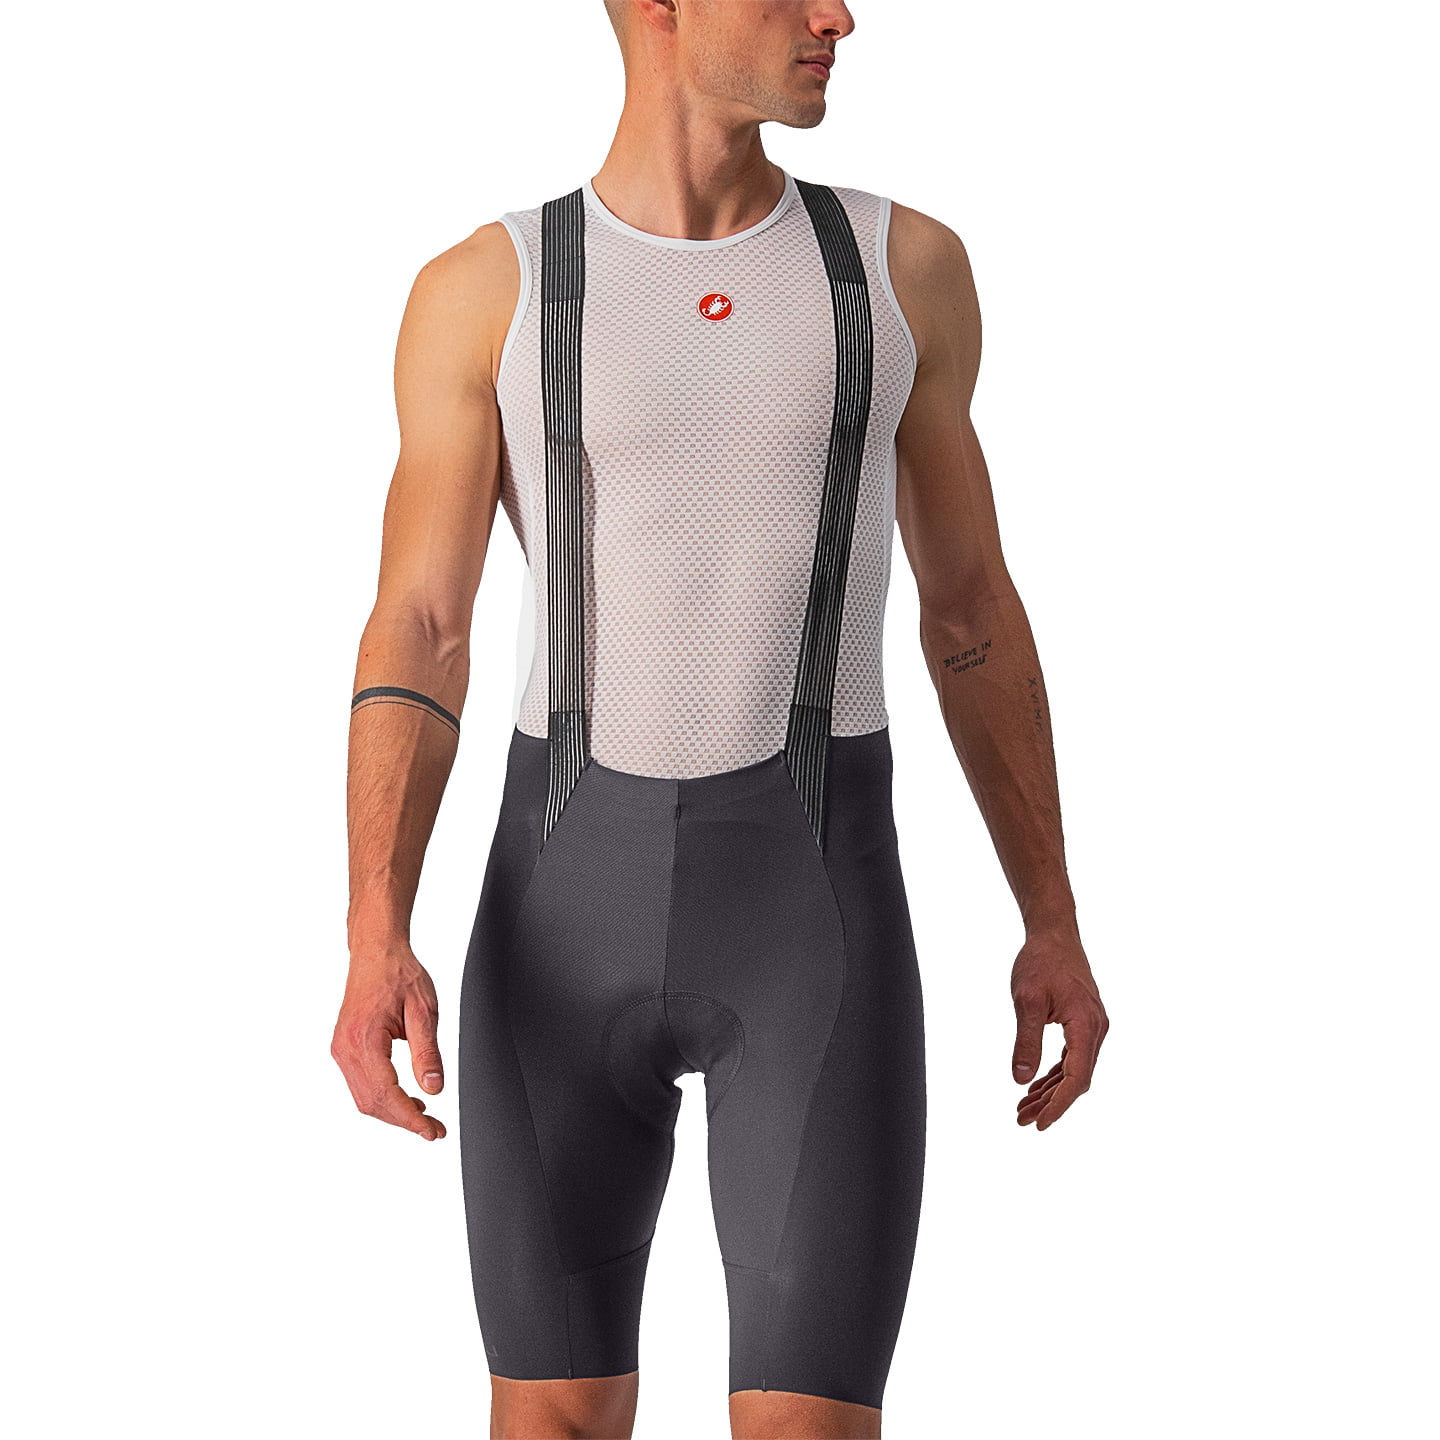 CASTELLI Free Aero RC Bib Shorts Bib Shorts, for men, size 2XL, Cycle shorts, Cycling clothing